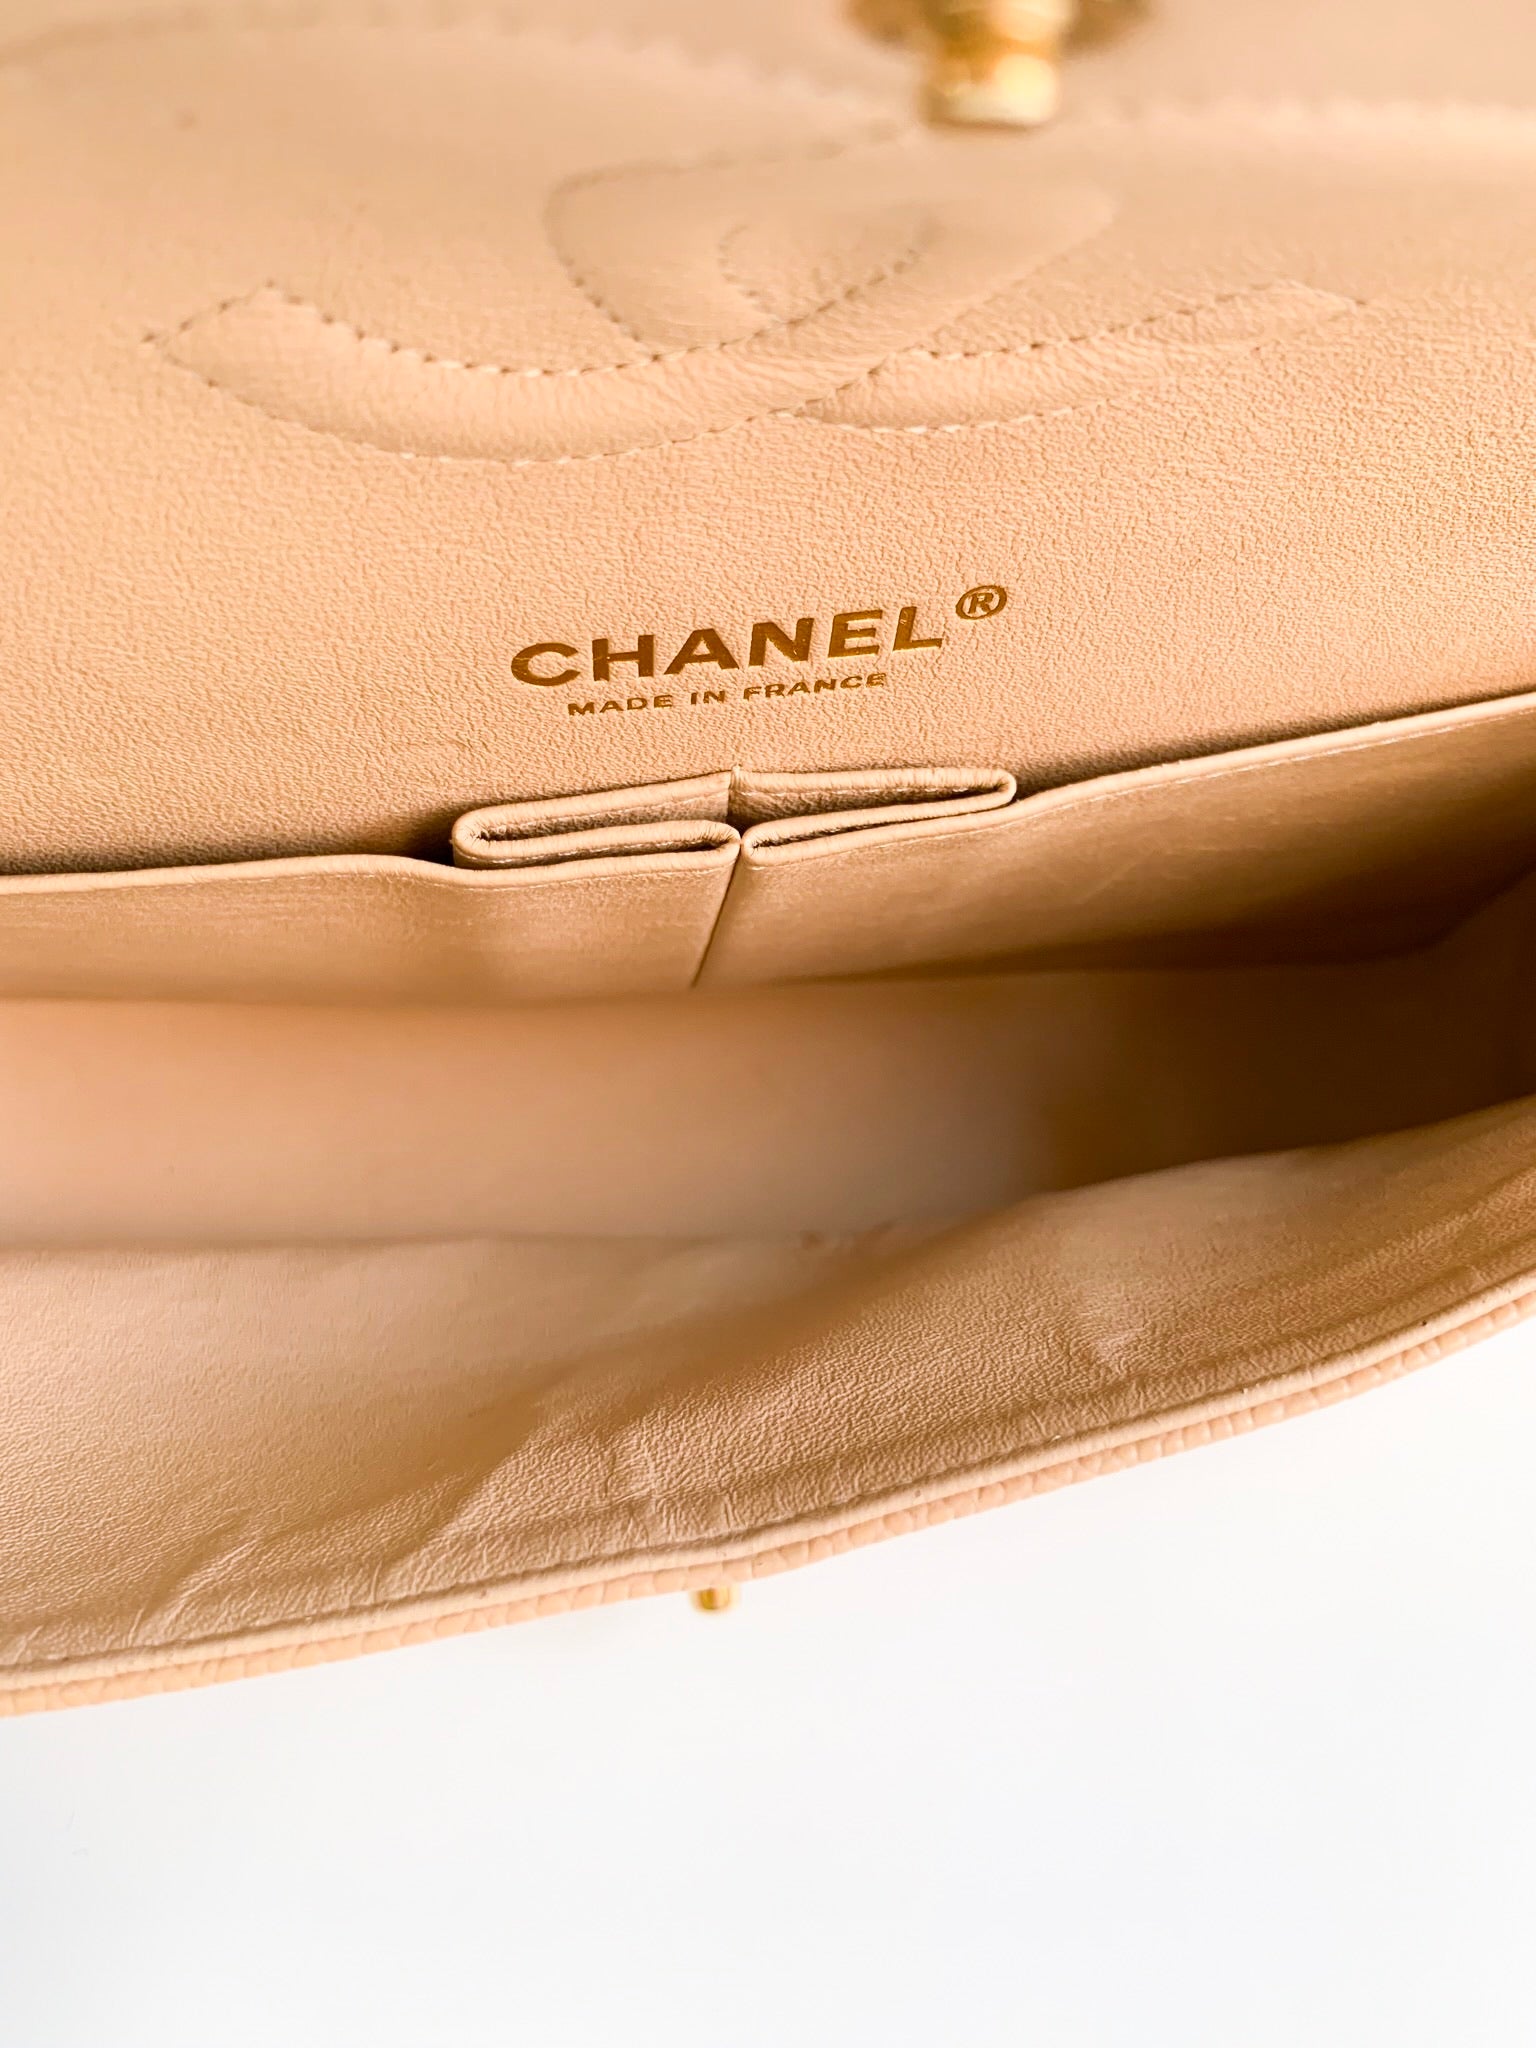 BNIB Chanel Medium Classic Double Flap Bag Beige Clair Caviar Gold Hardware